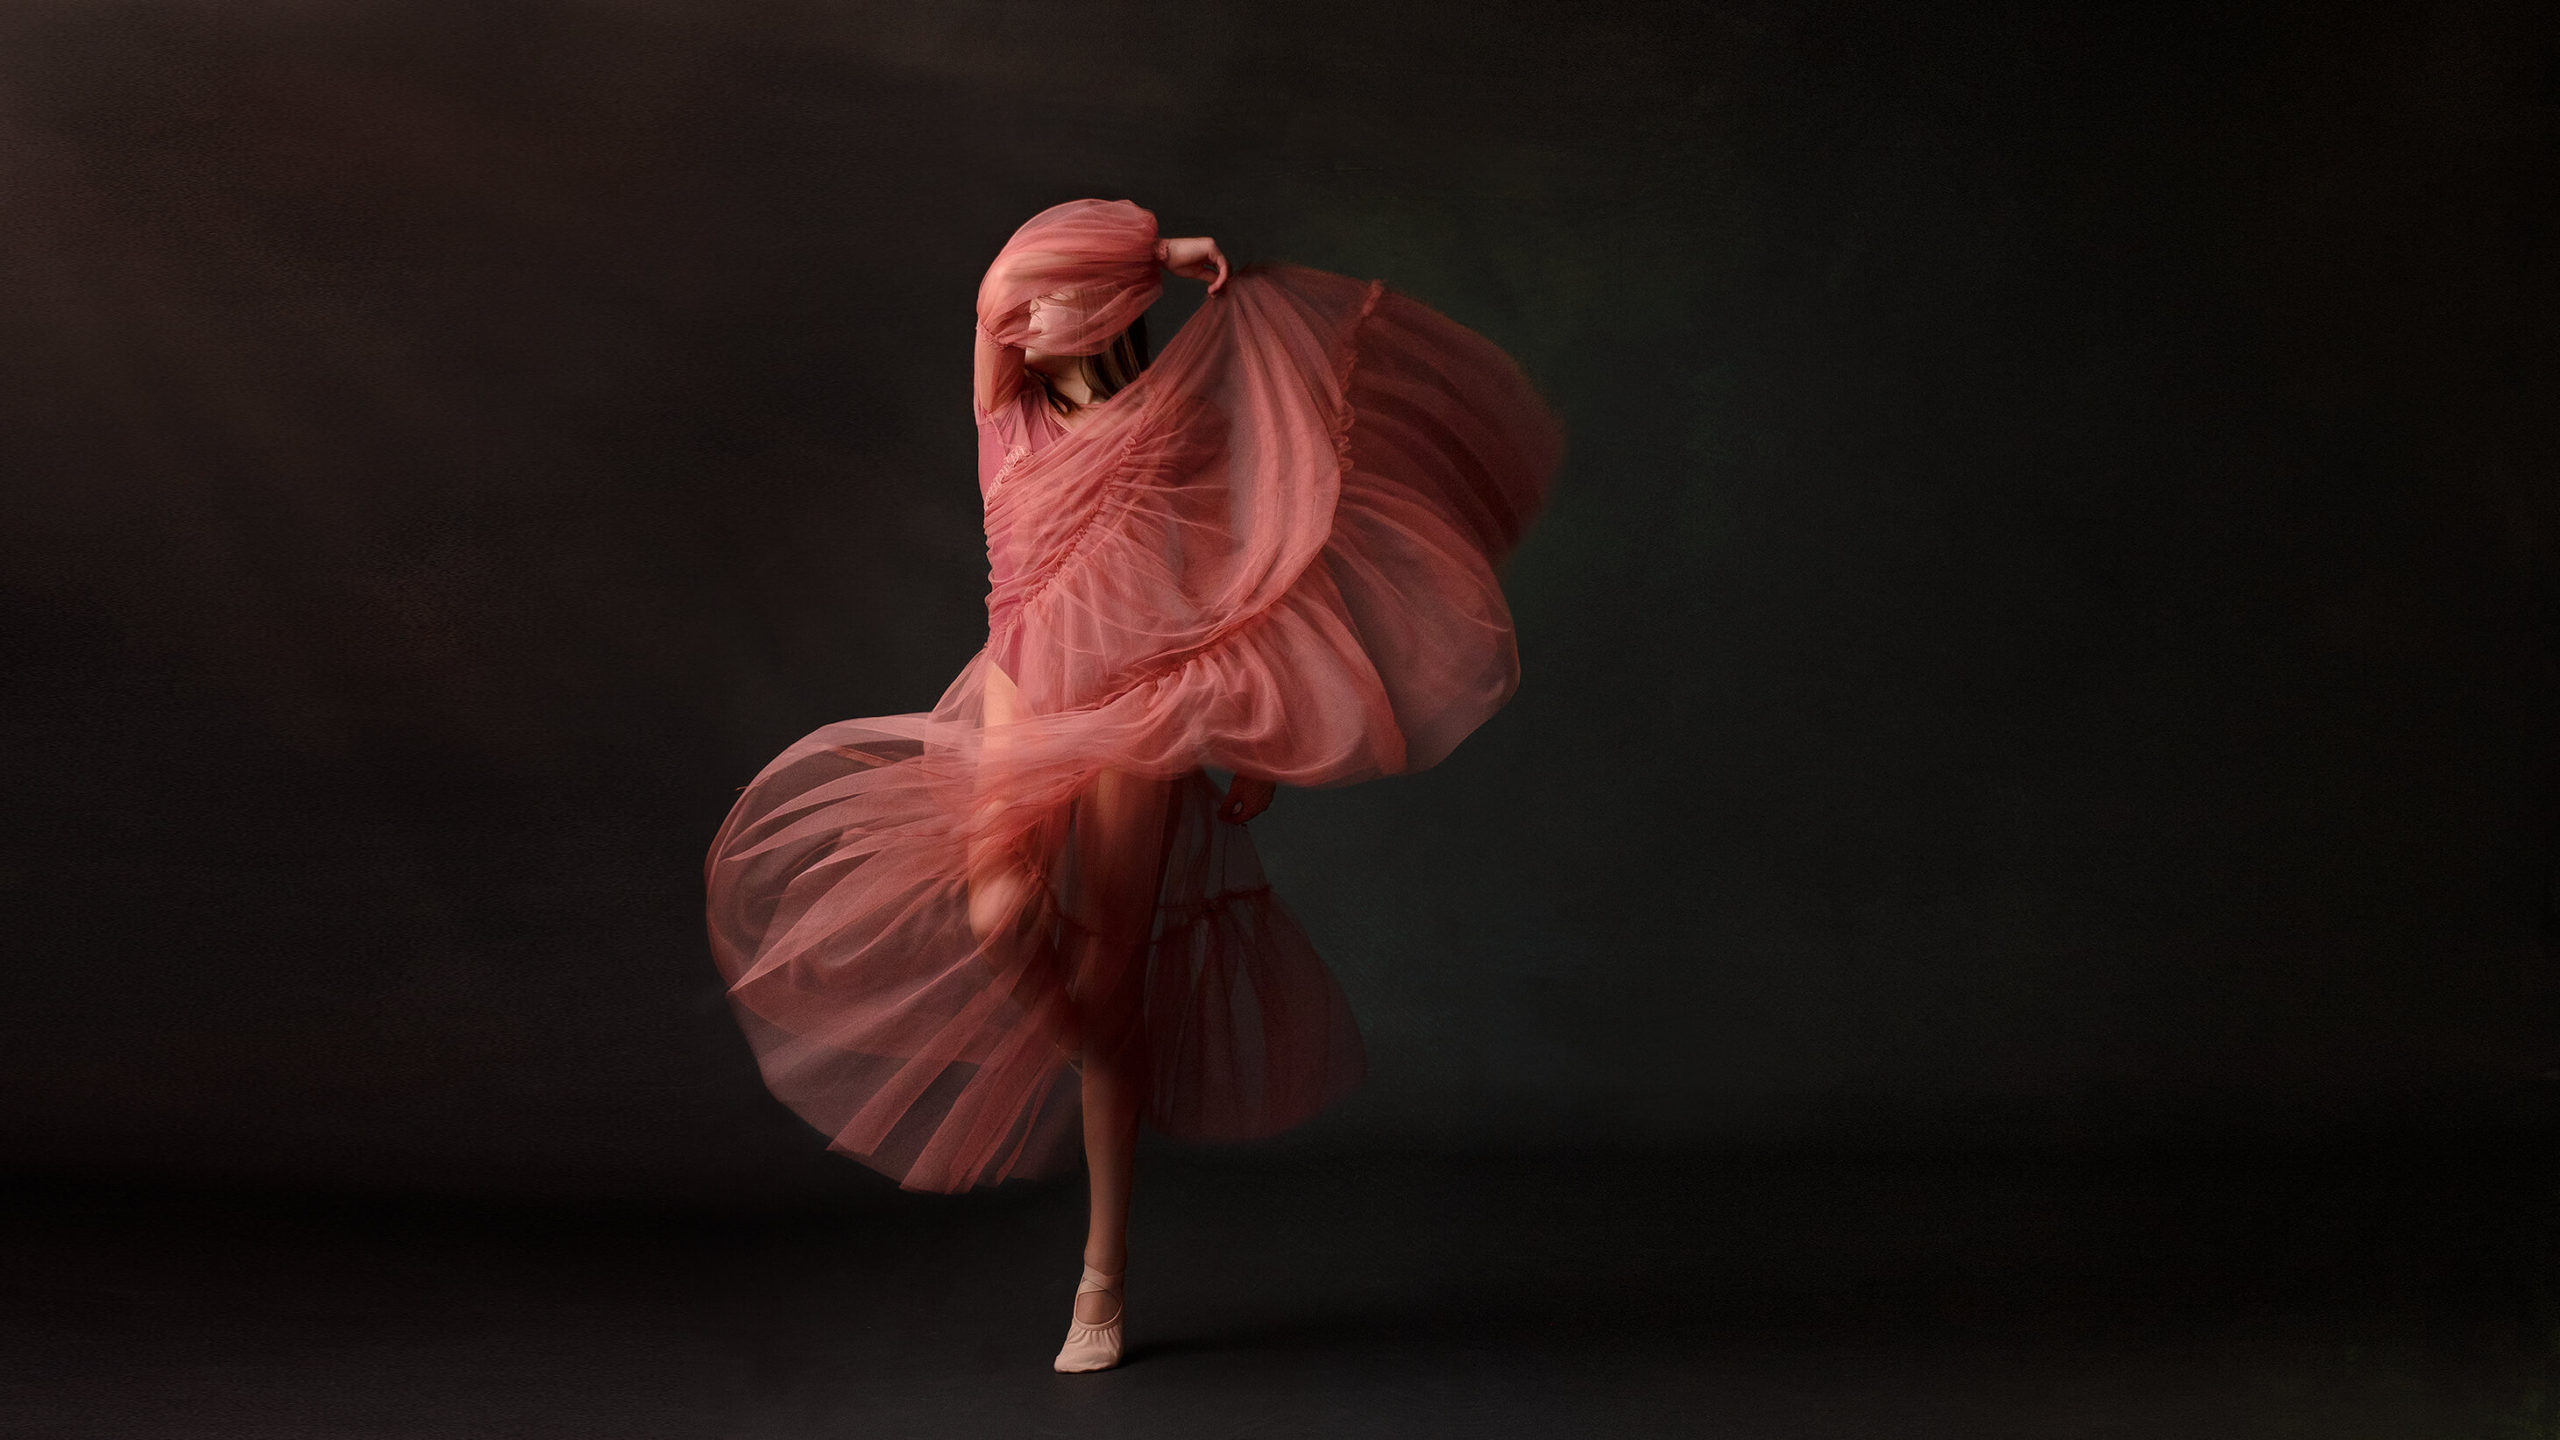 Girl twirling in California photo studio in pink dress